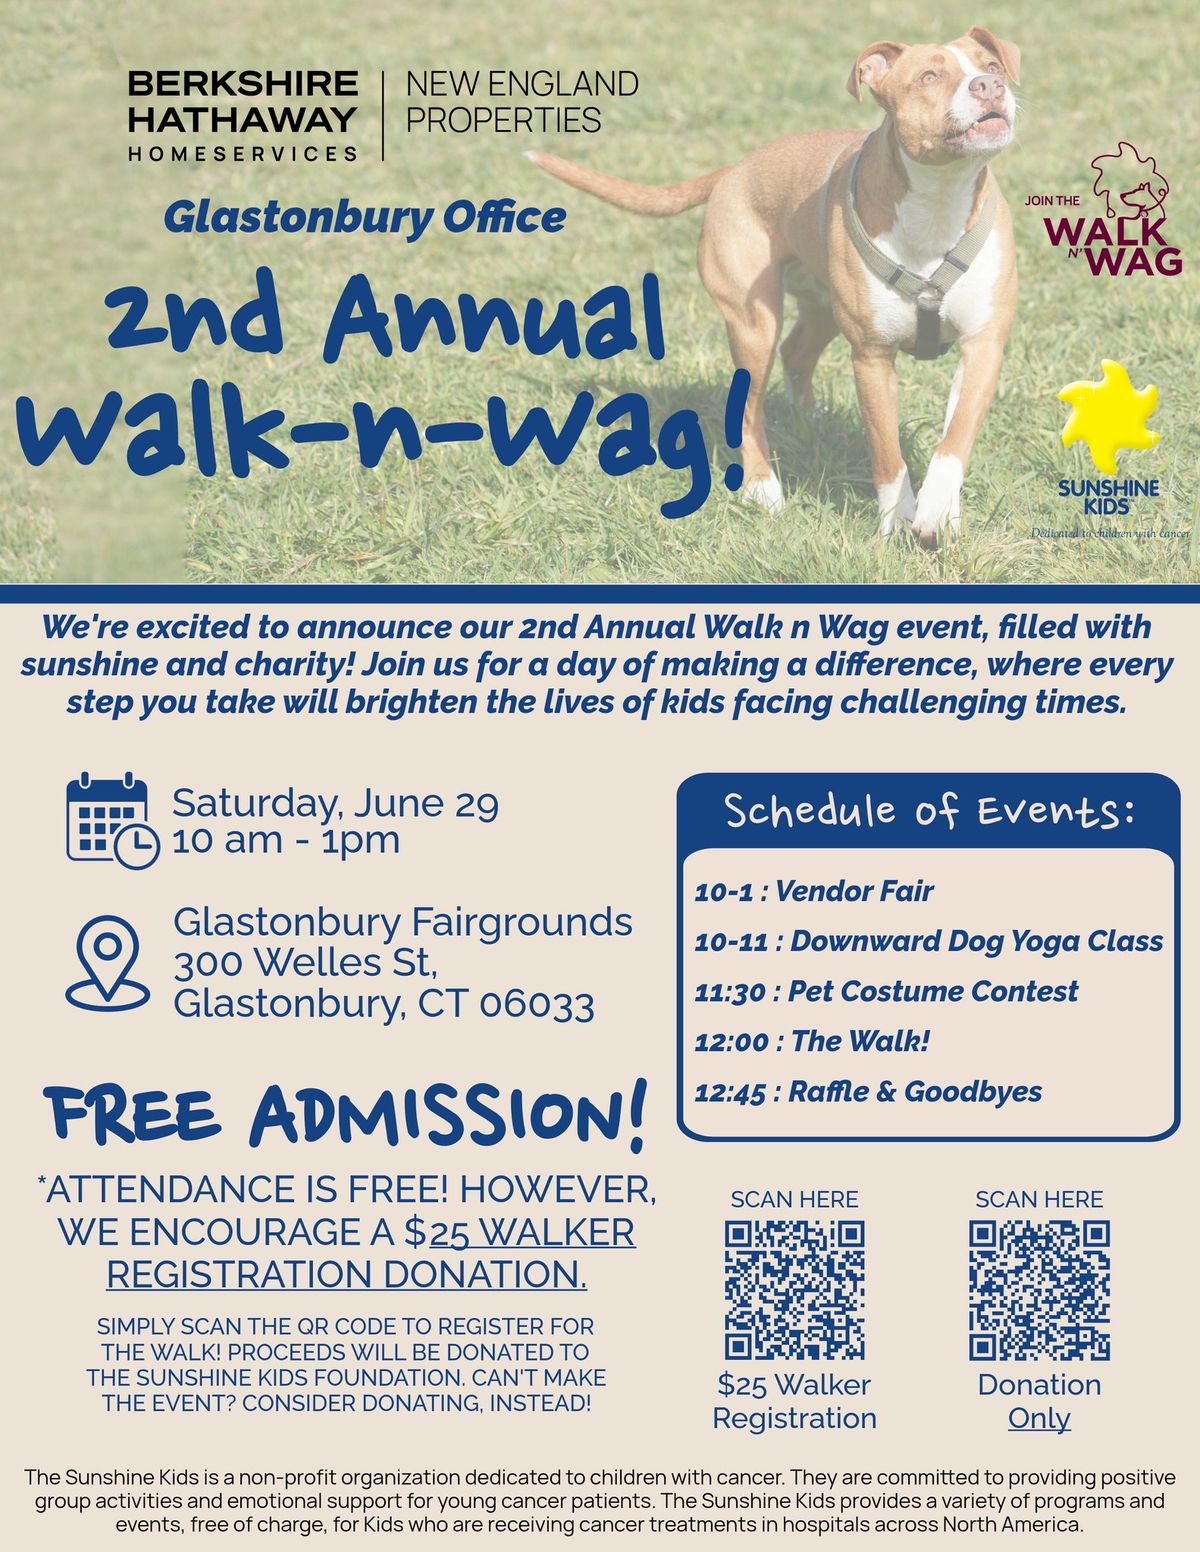 2nd Annual Walk-n-Wag